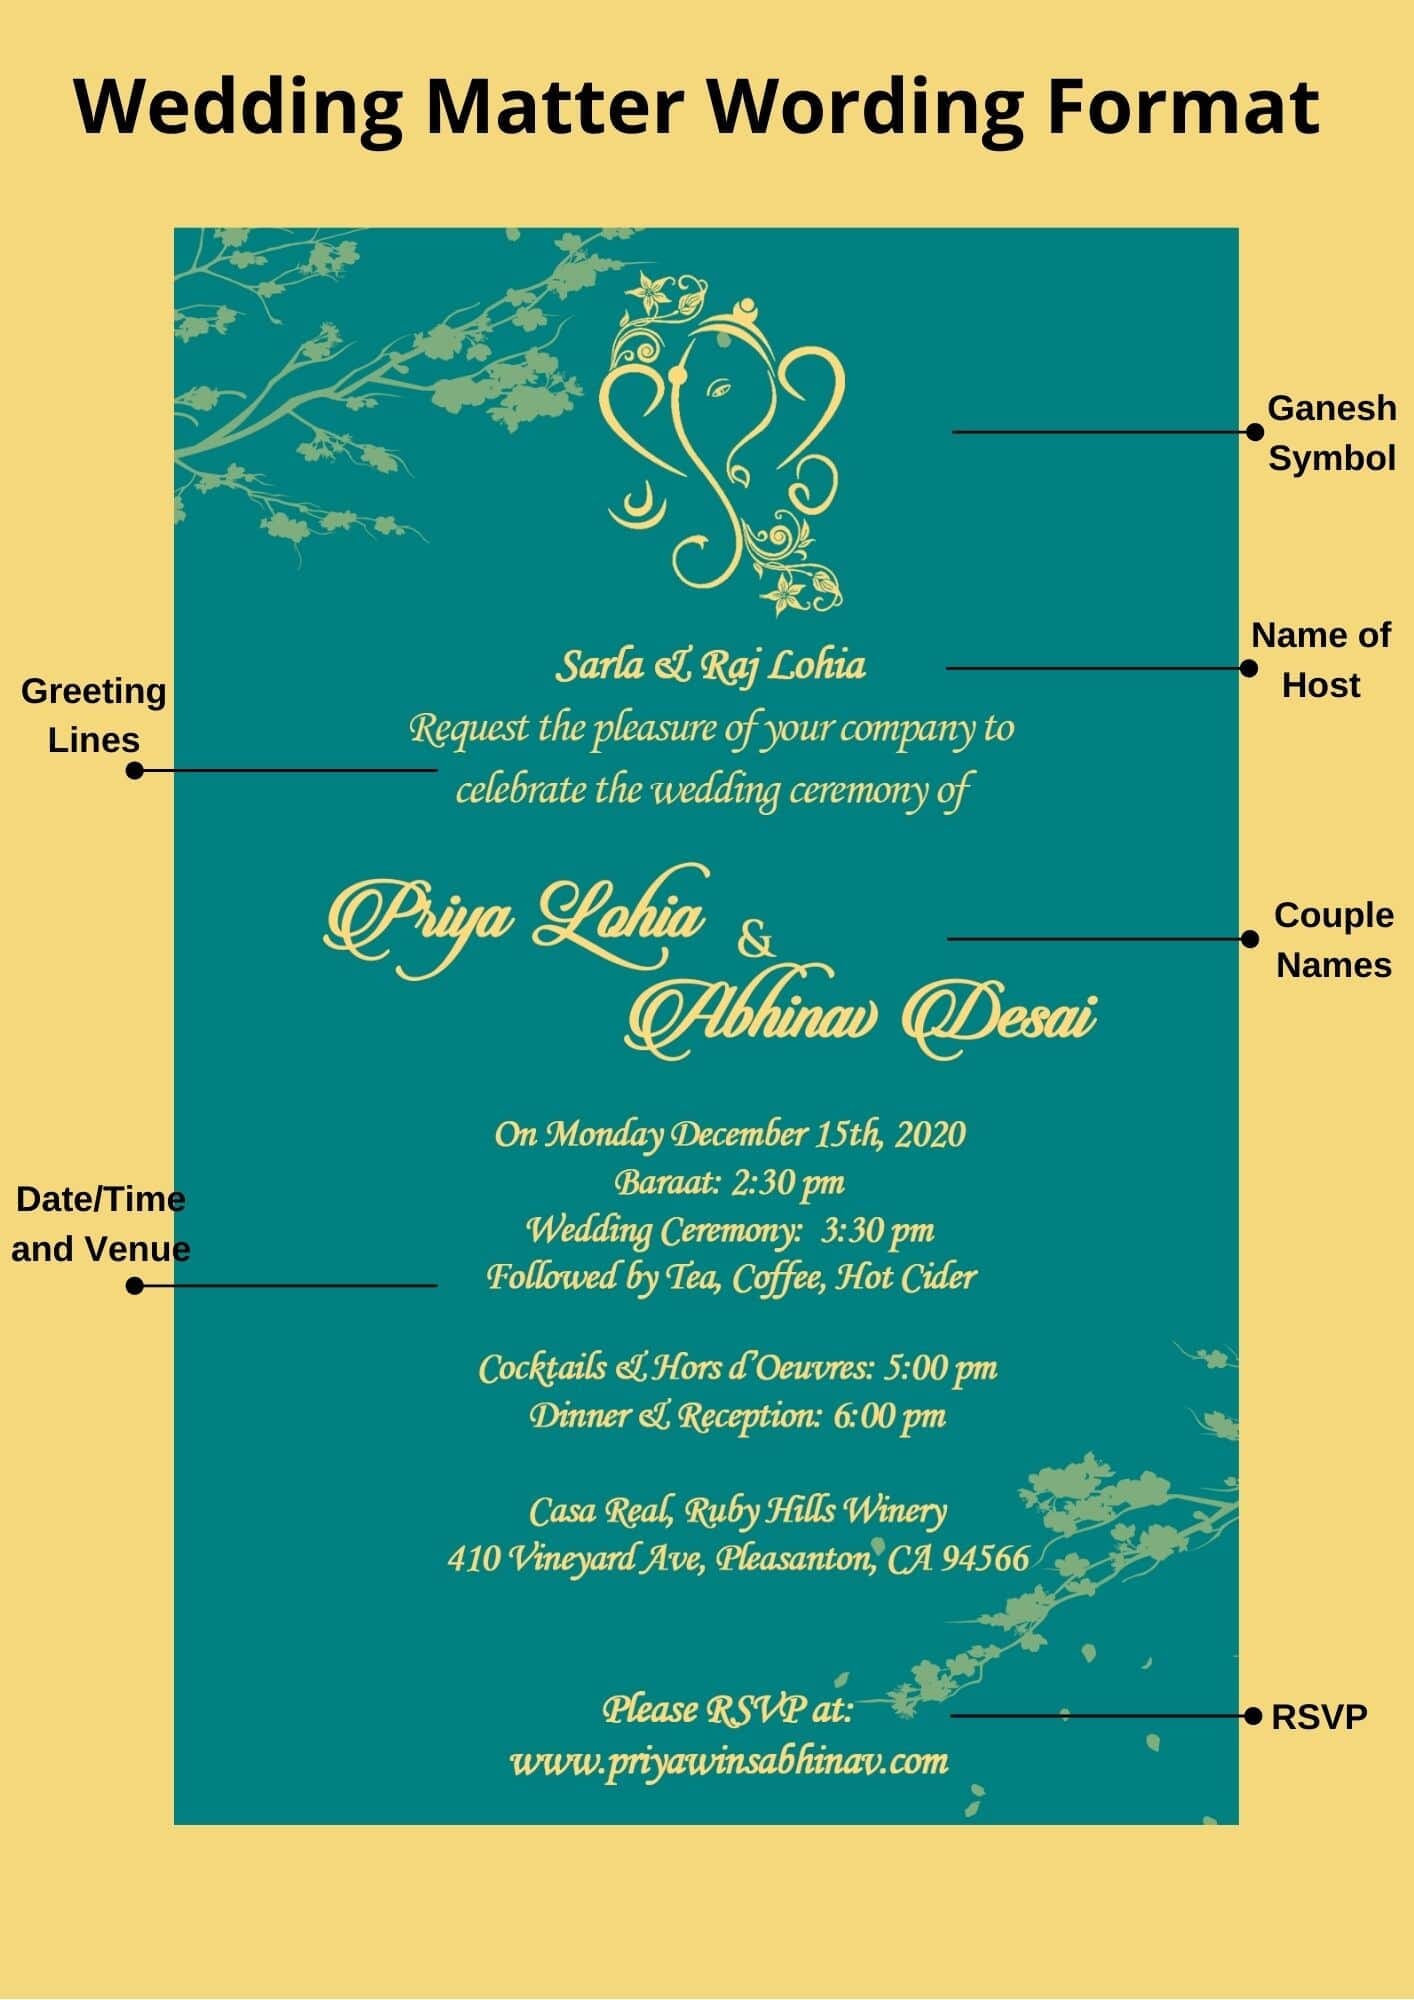 Sample wedding invitation wording